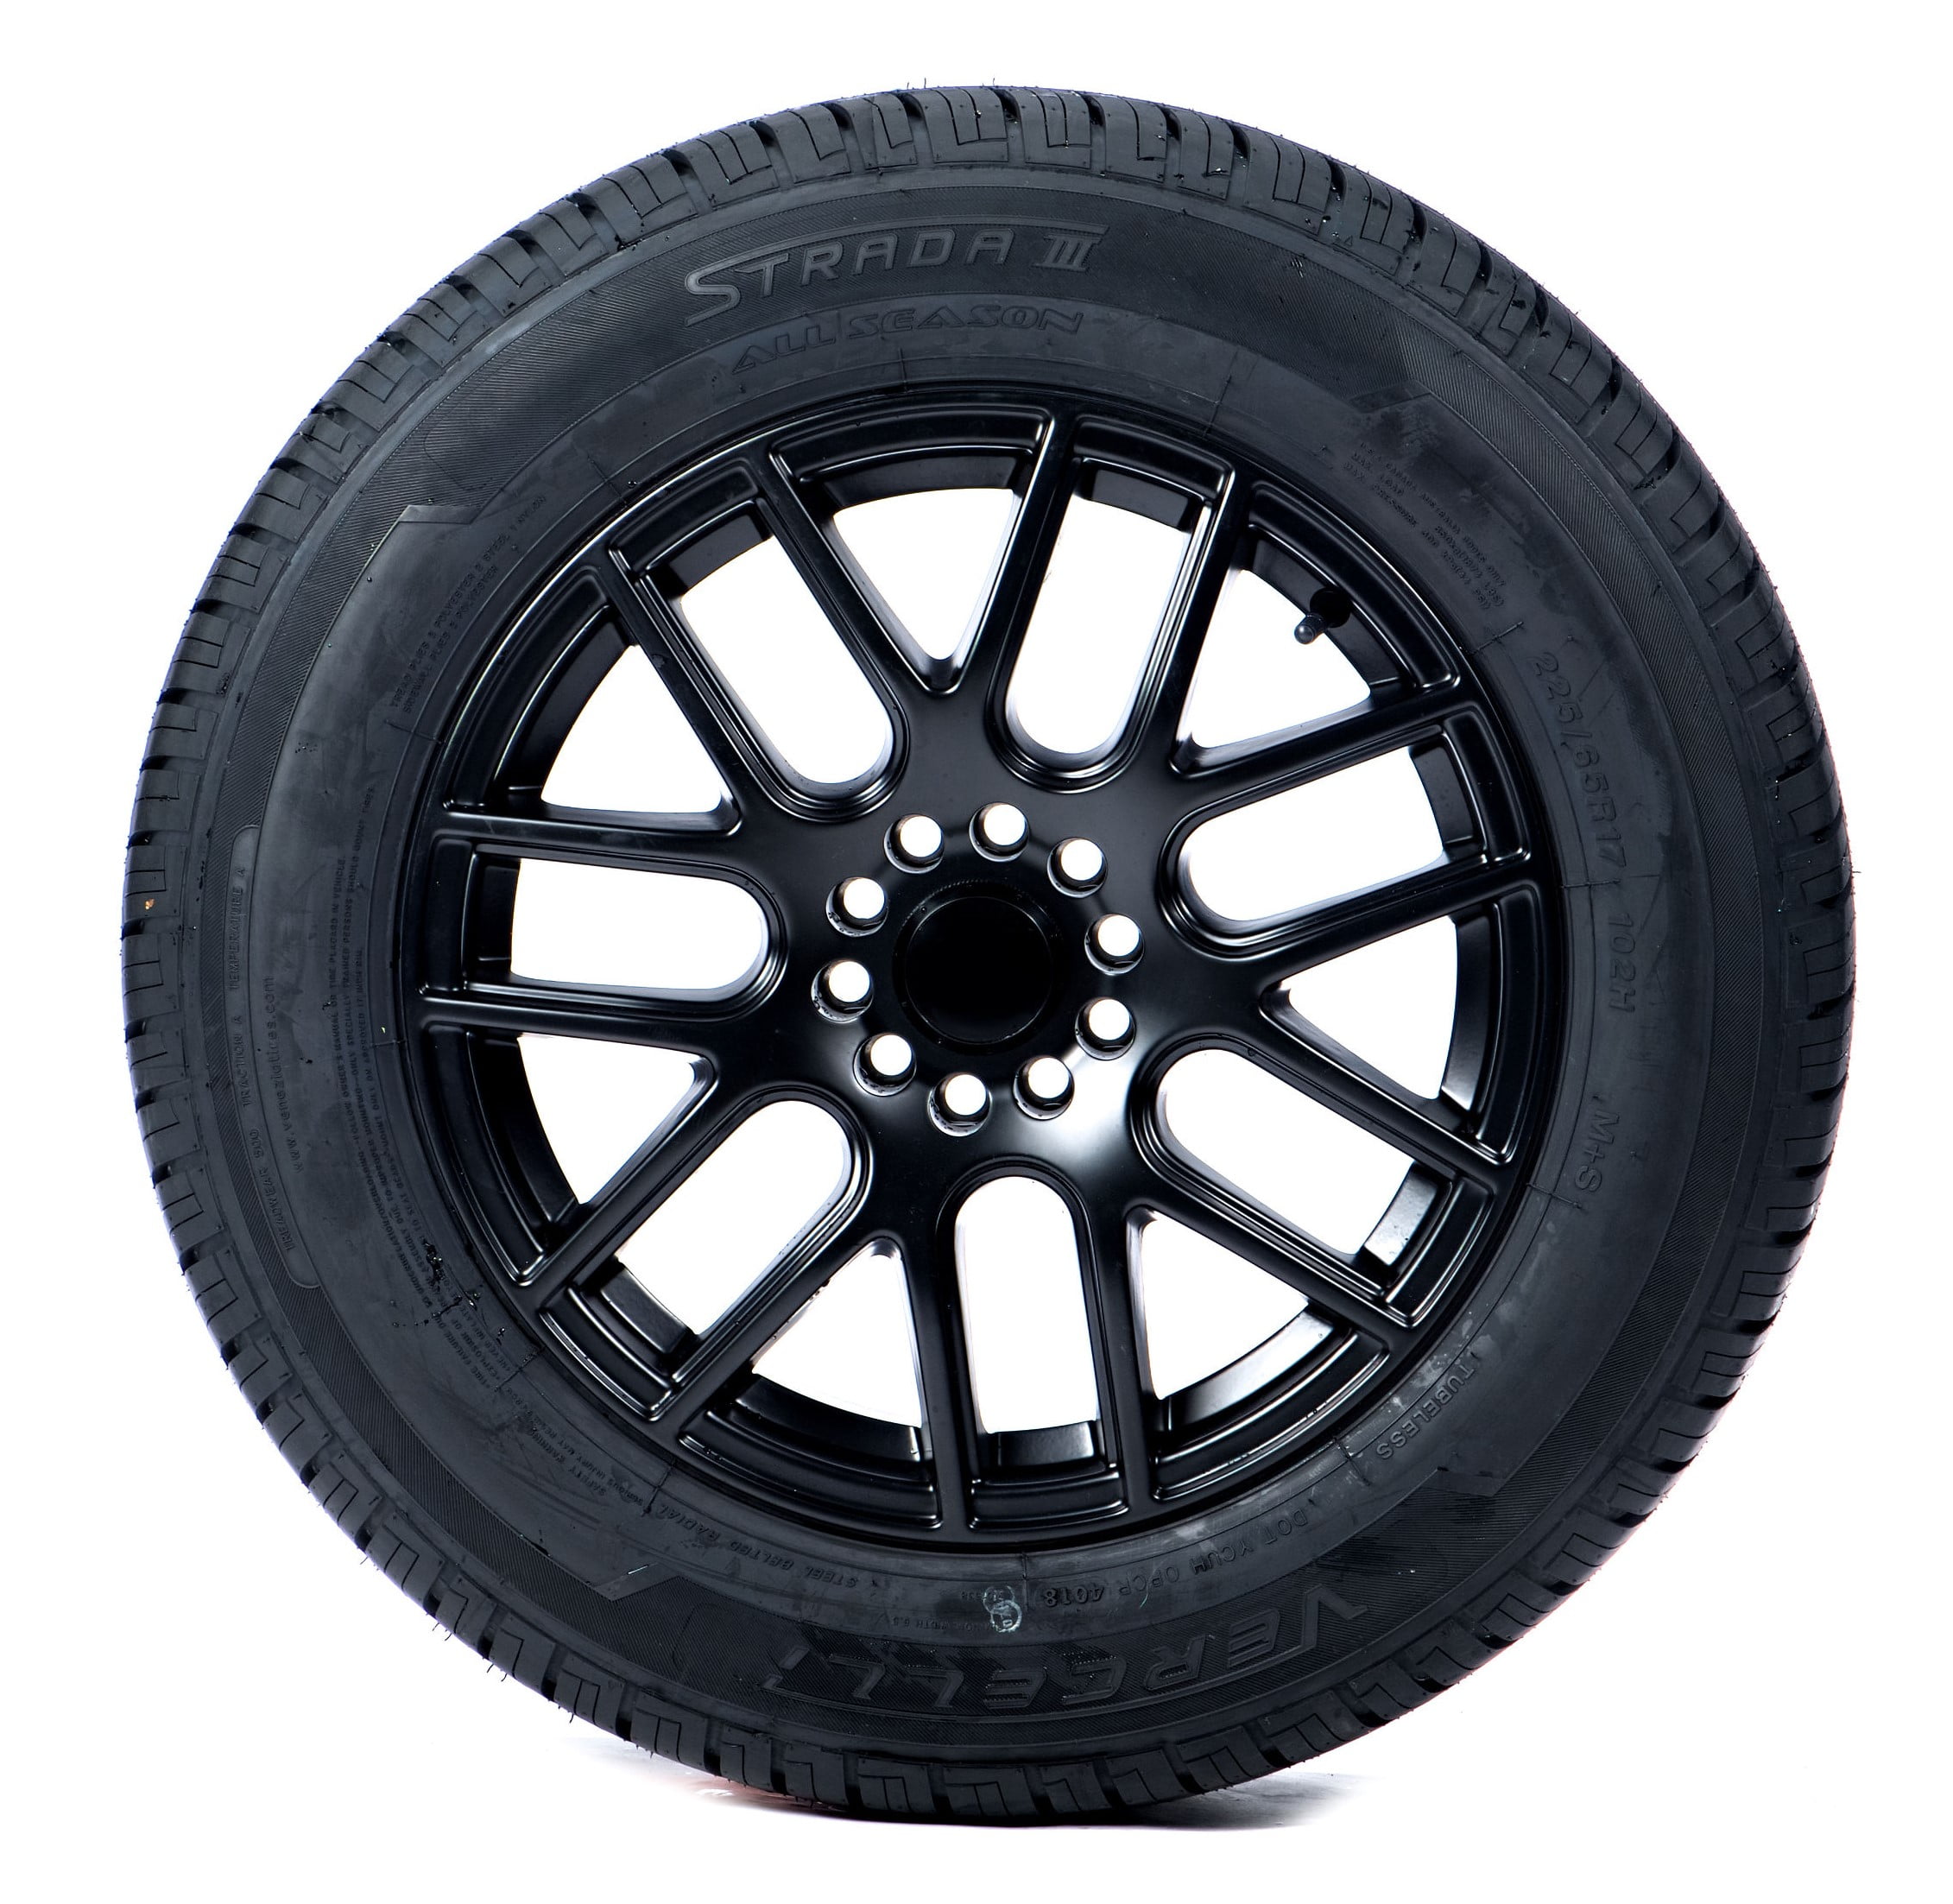 255/70R18 113T Vercelli Strada III All-Season Radial Tire 